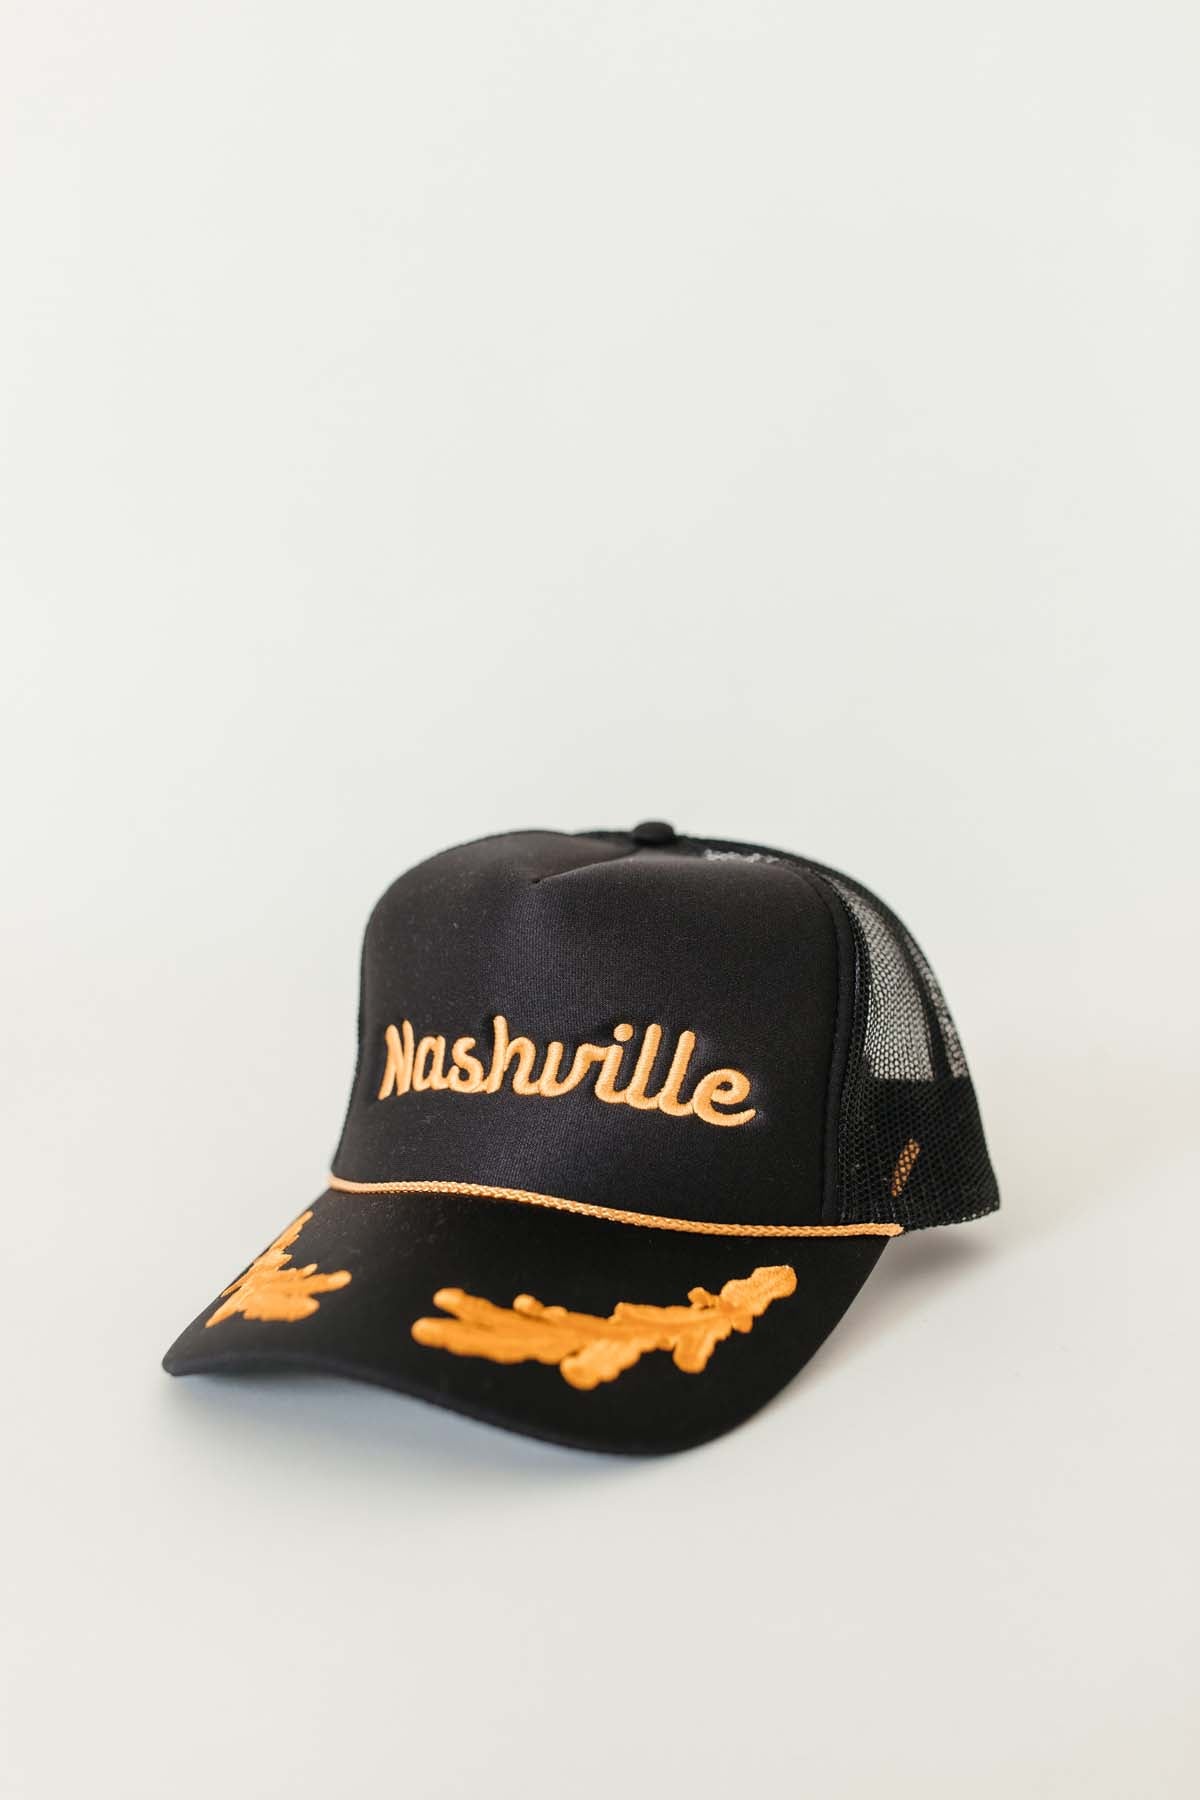 Nashville Trucker Hat, alternate, color, black